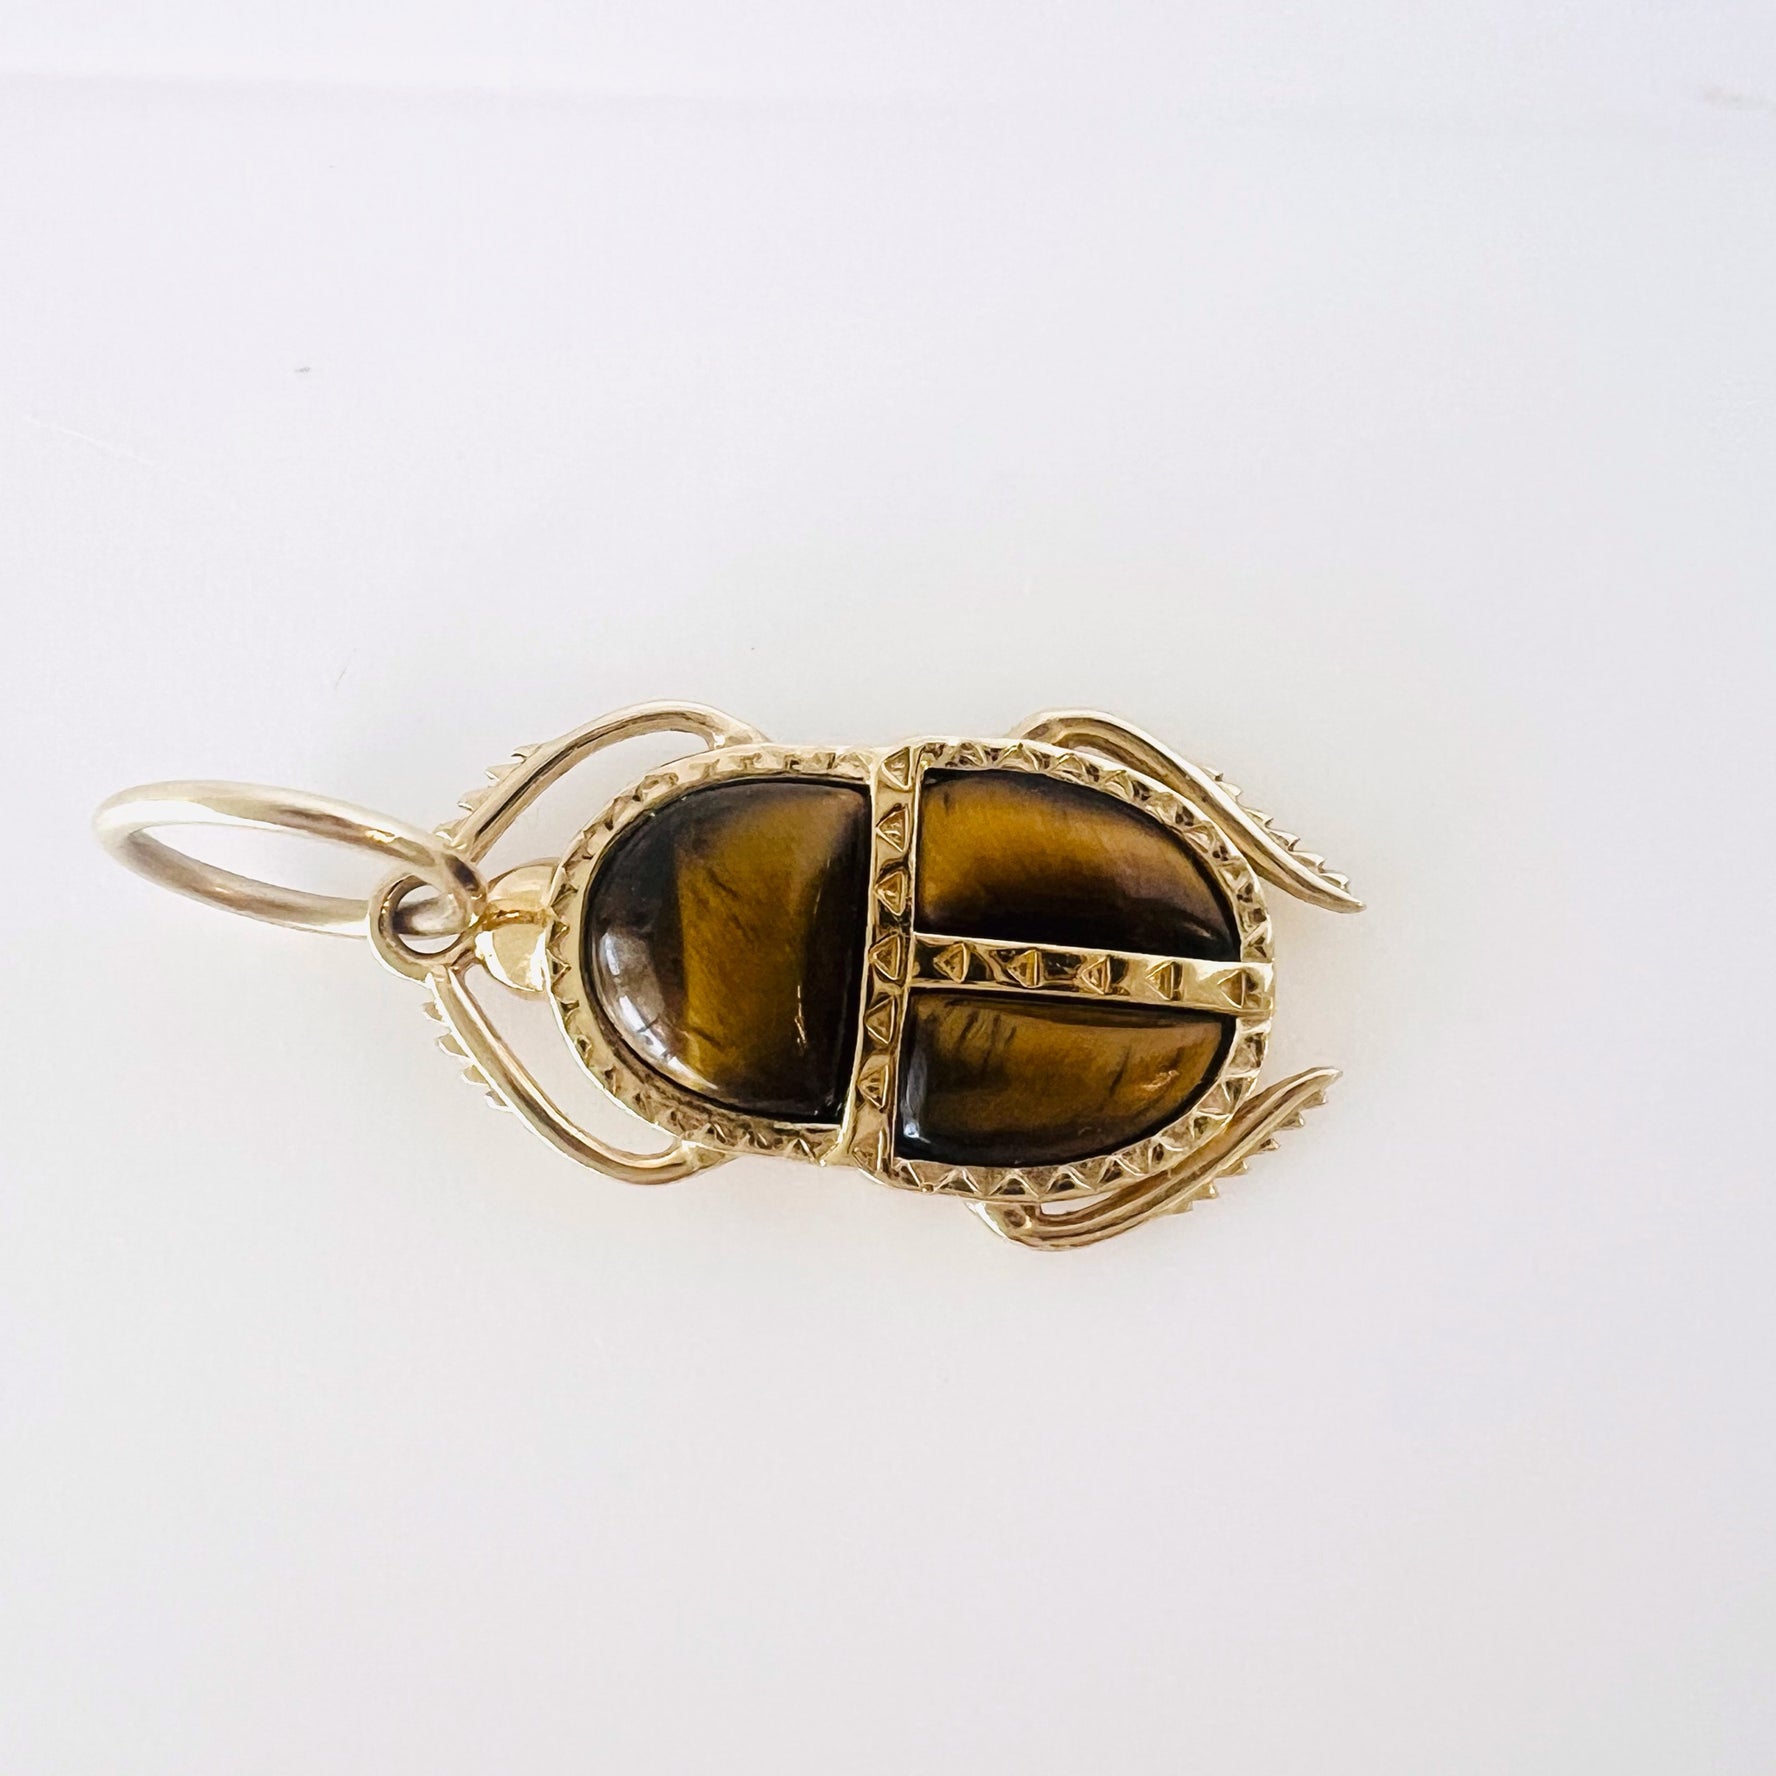 14k gold tiger eye bug pendant/charm